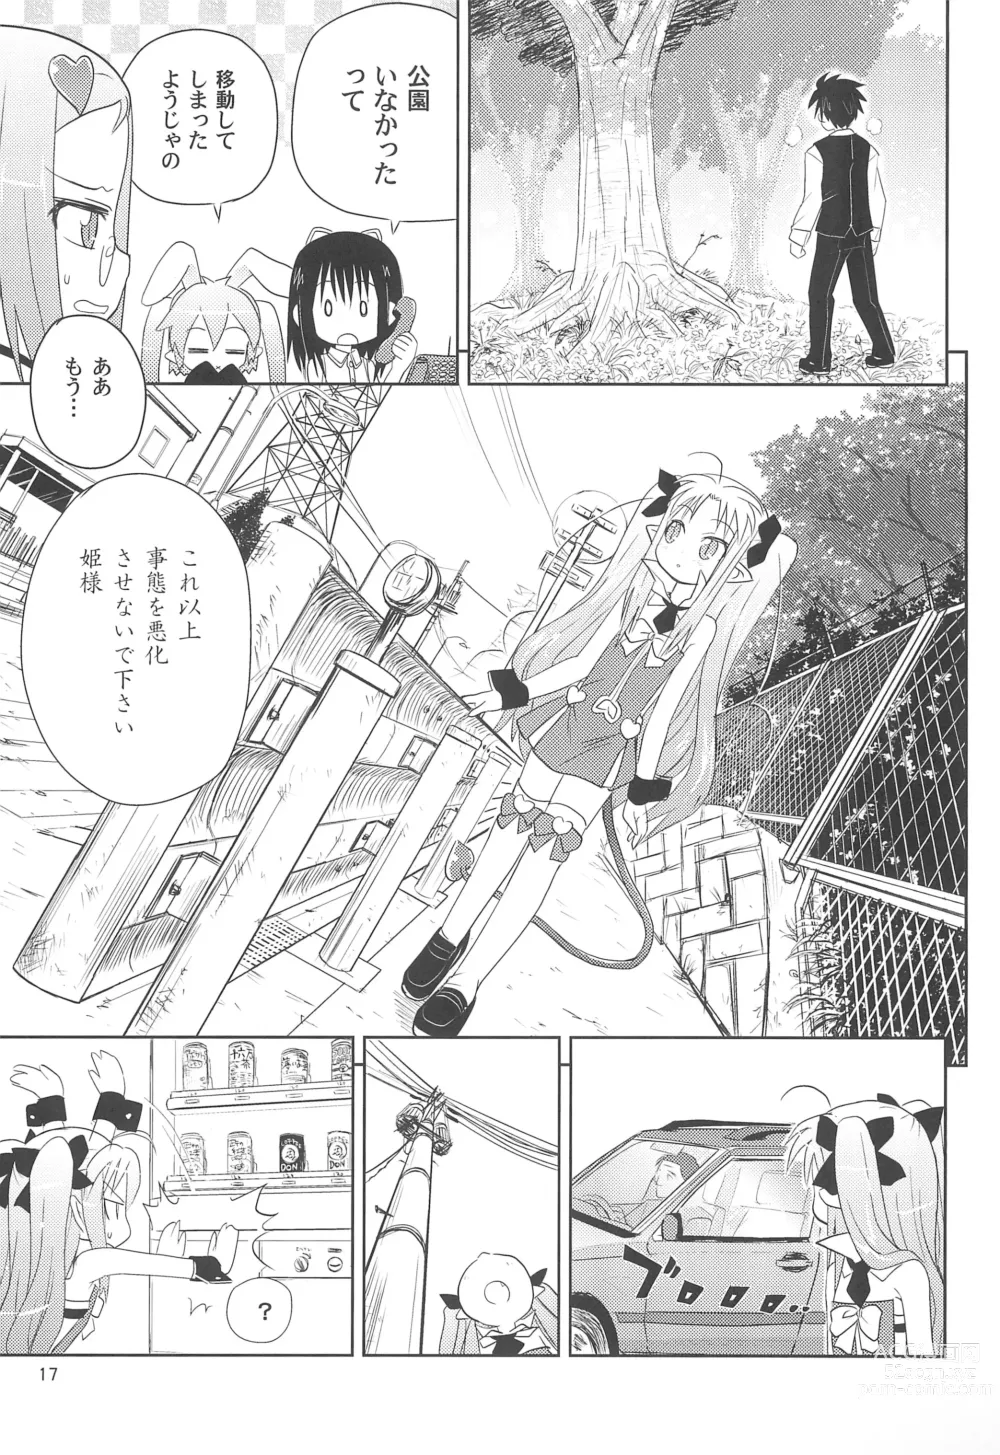 Page 17 of doujinshi Maigo no Maigo no Hime-sama Plus